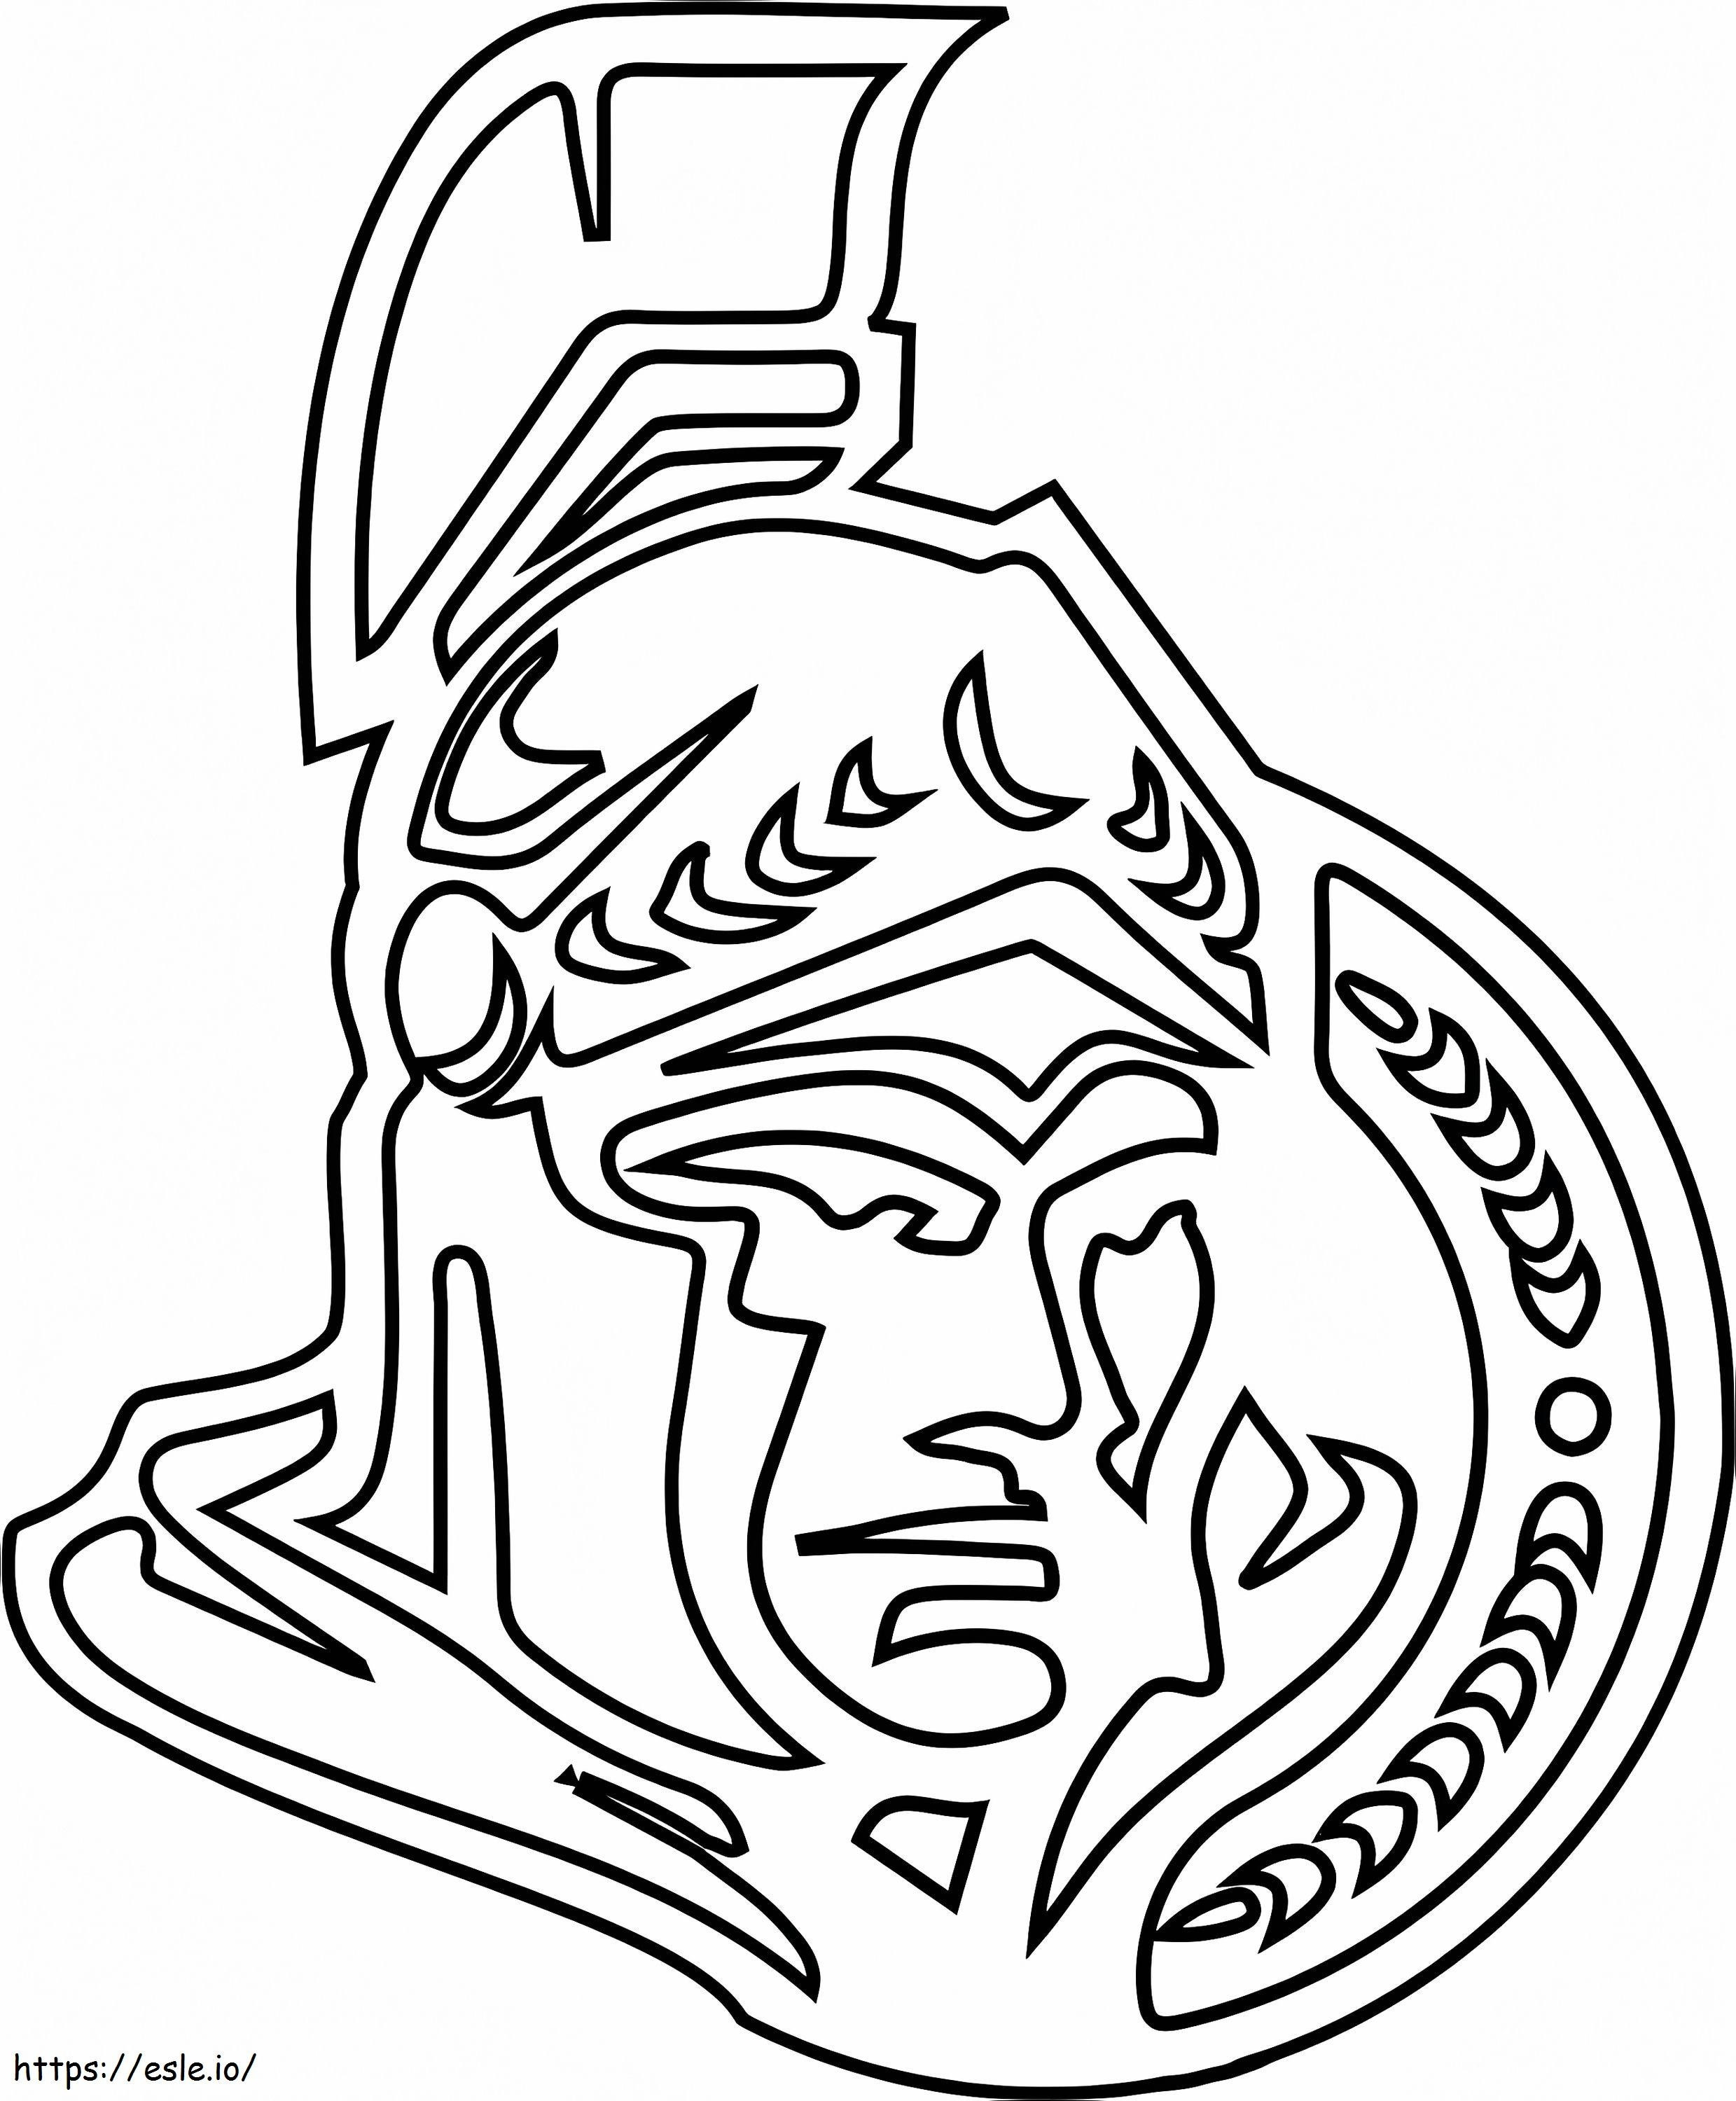 Ottawa Senatörleri Logosu boyama